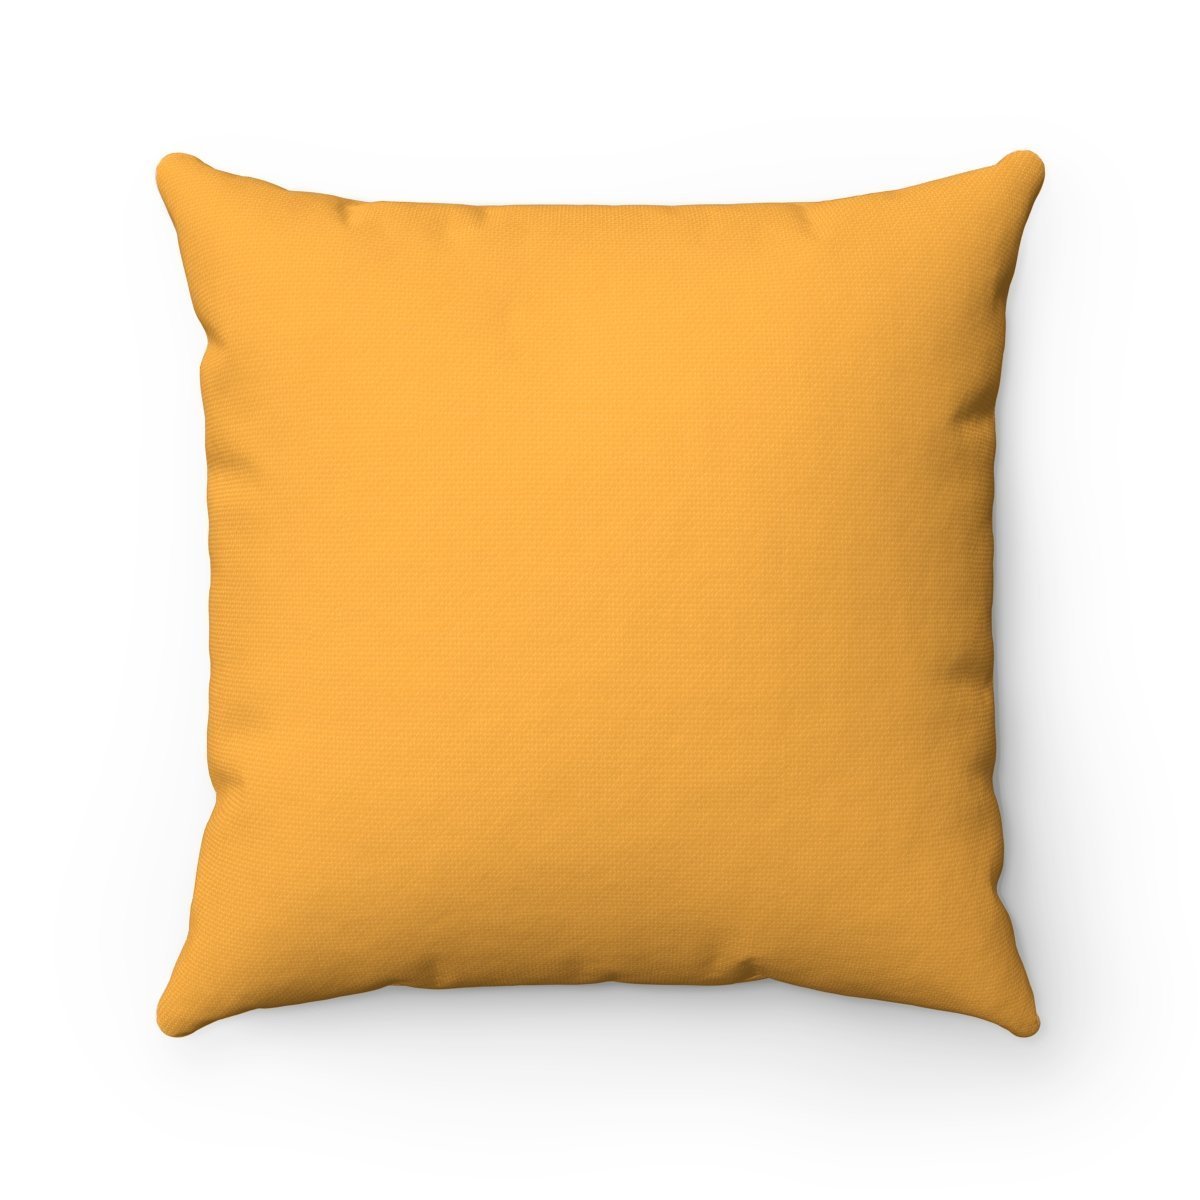 Bright yellow cat throw pillow